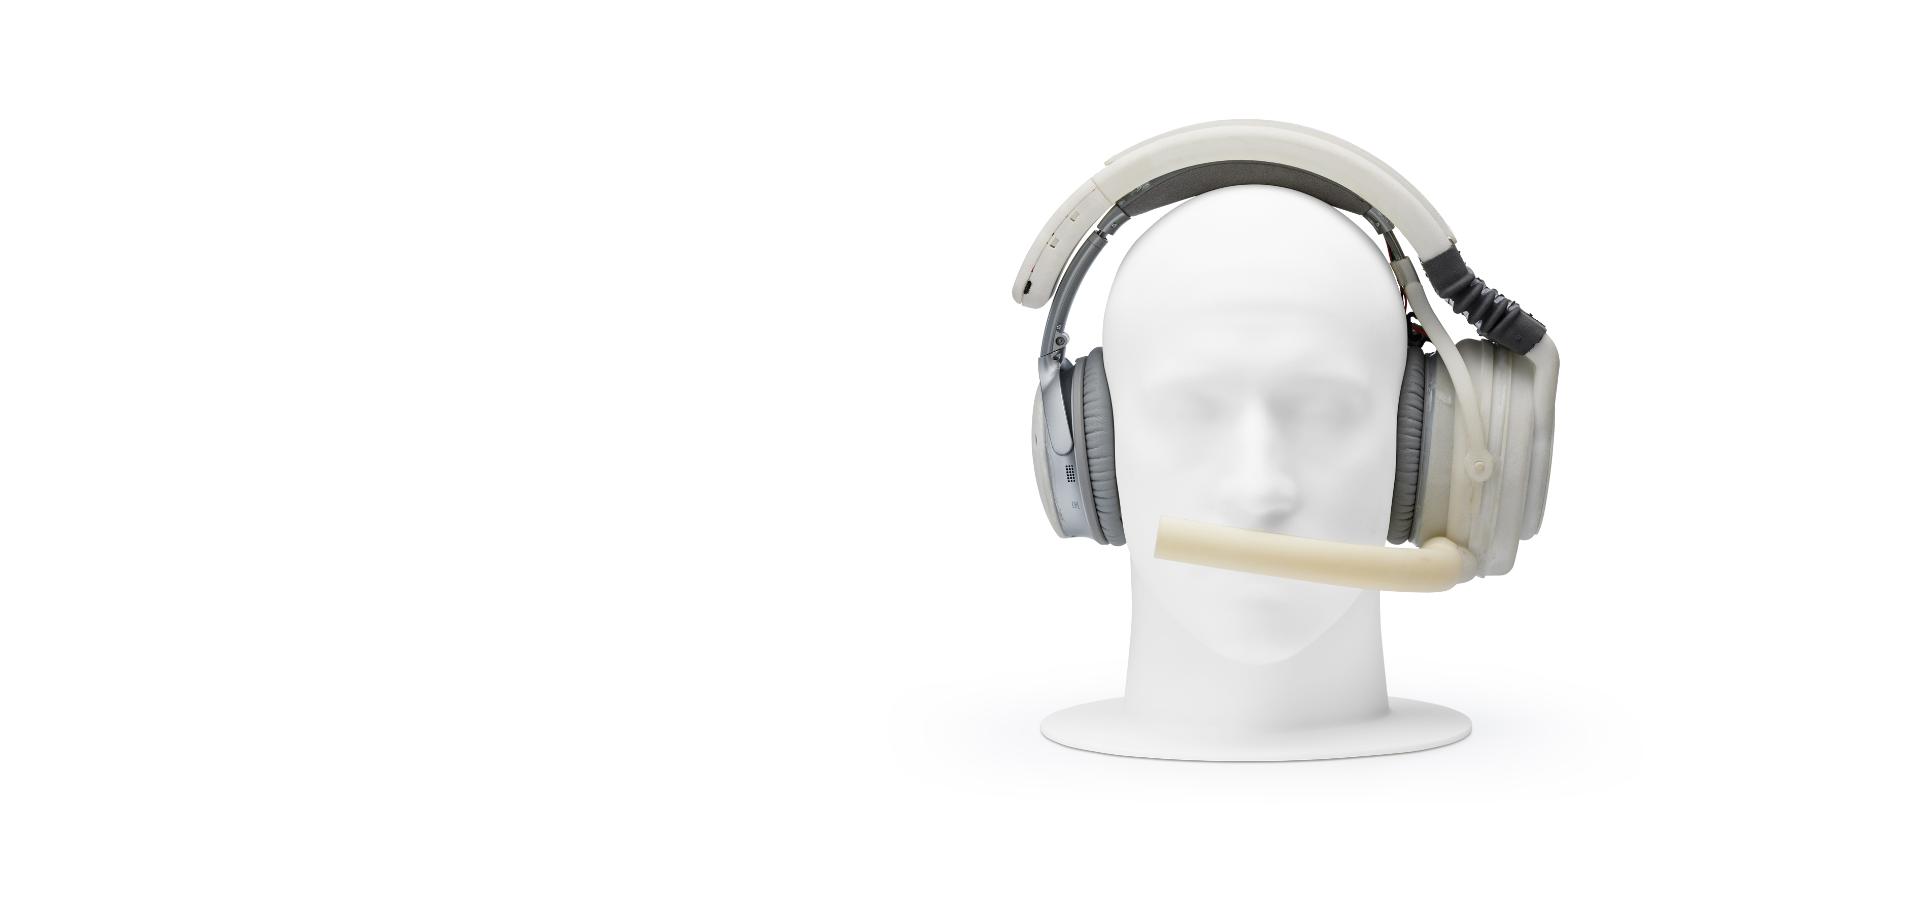 Manikin head wearing prototype headphones, with mouthpiece